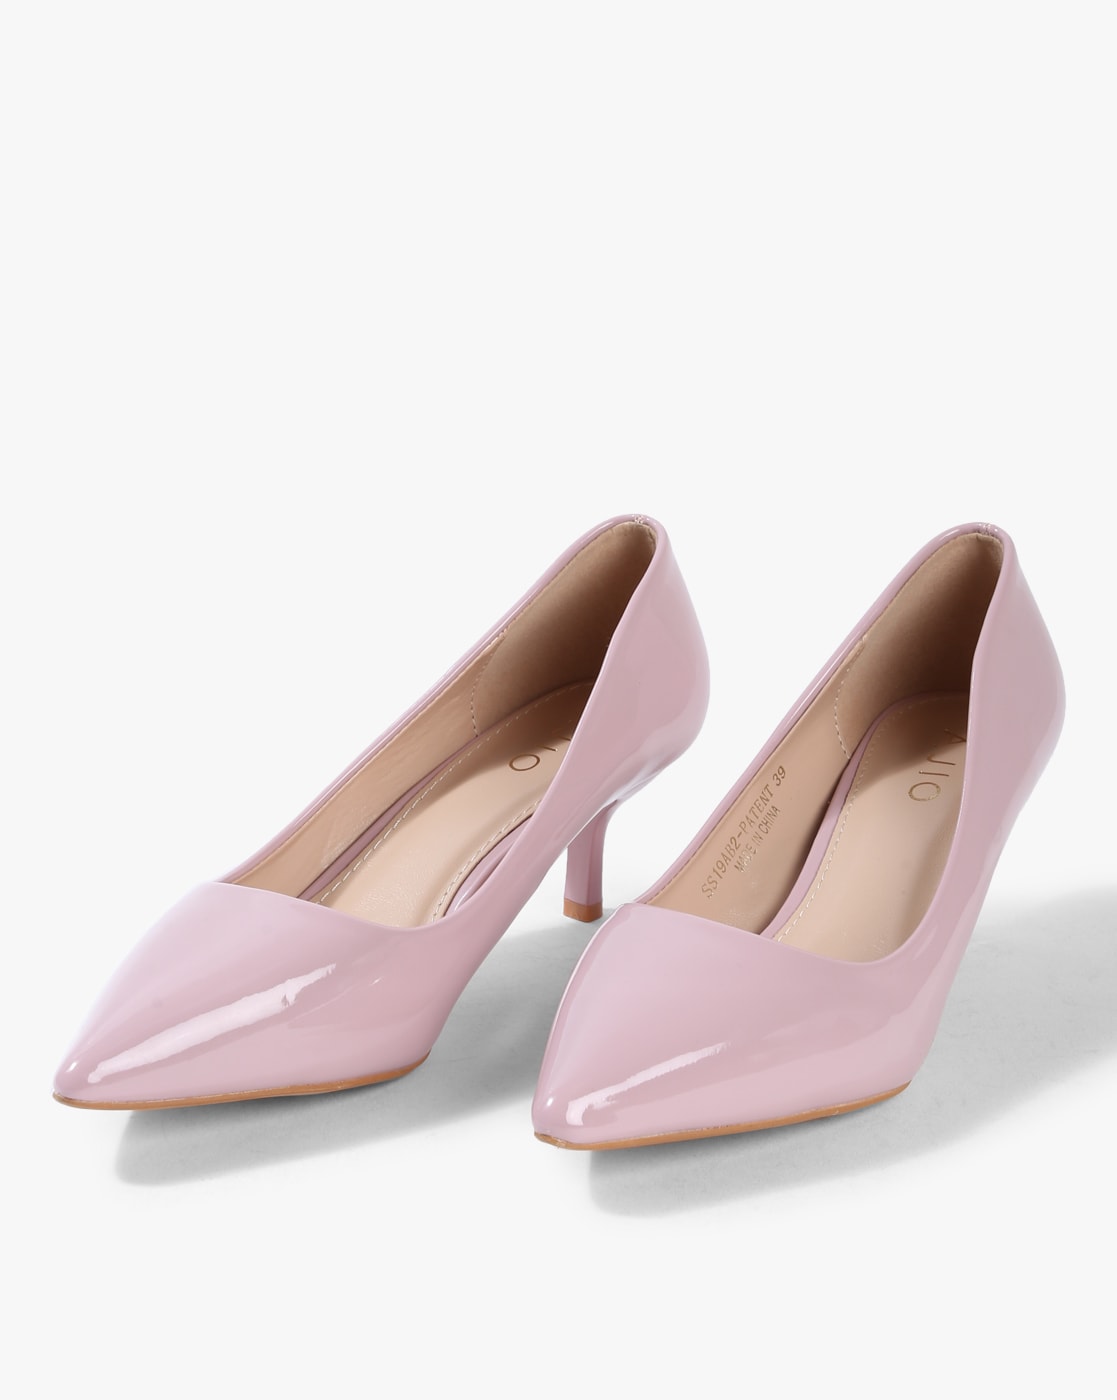 Pink Cute High Heels With Bow, Love Teen Girls Shoes, Party Shoes, Women  Shoes | Cute high heels, Cute shoes heels, Teen girl shoes